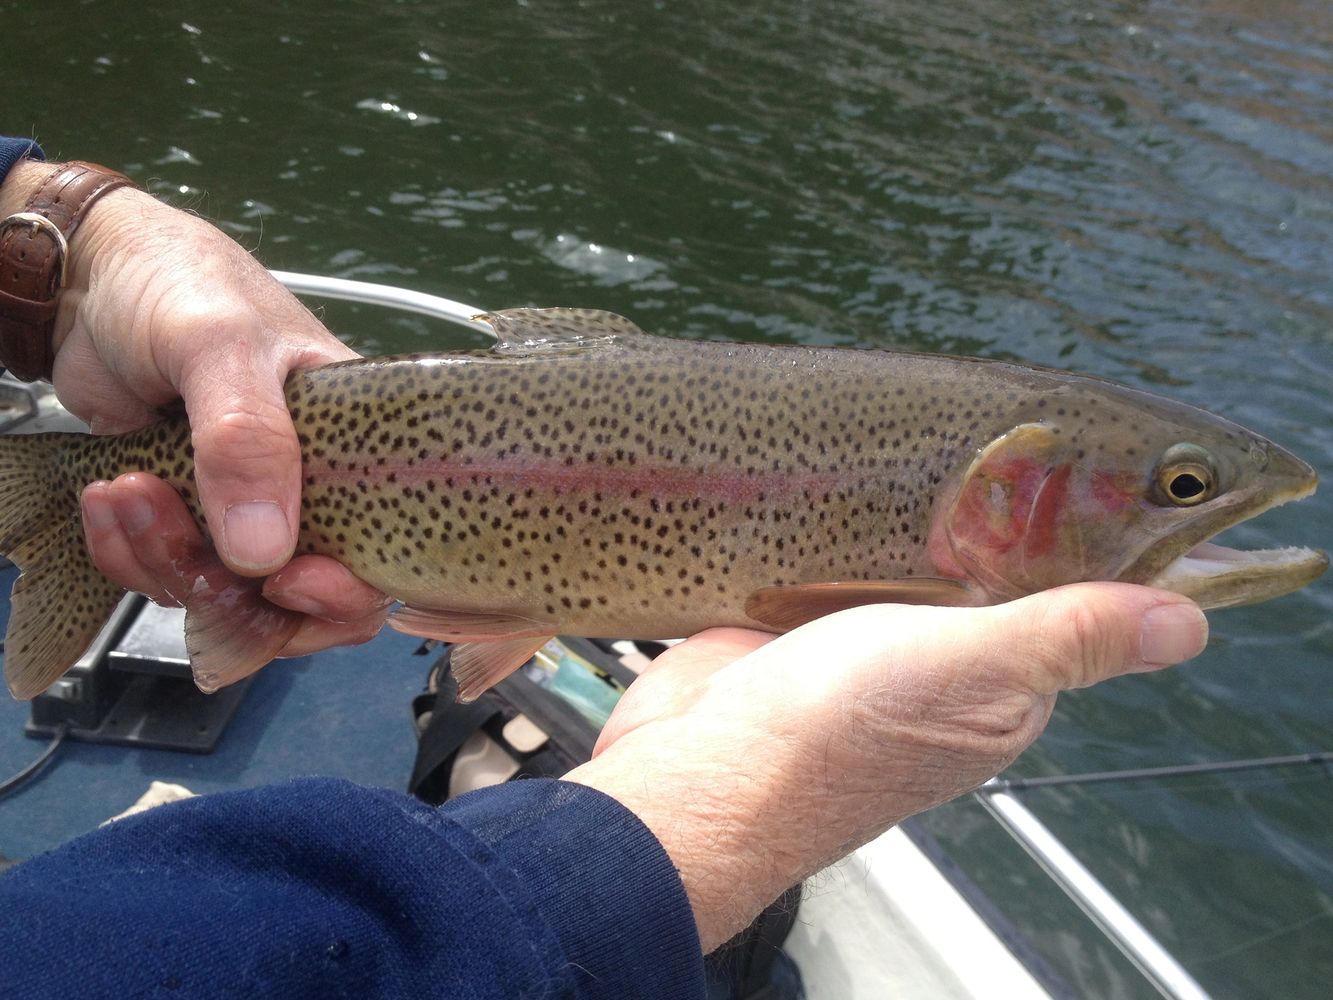 Colorado Guided Fishing Trips
Colorado Fishing Charters
Fort Collins Fishing
Rainbow Trout Fishing